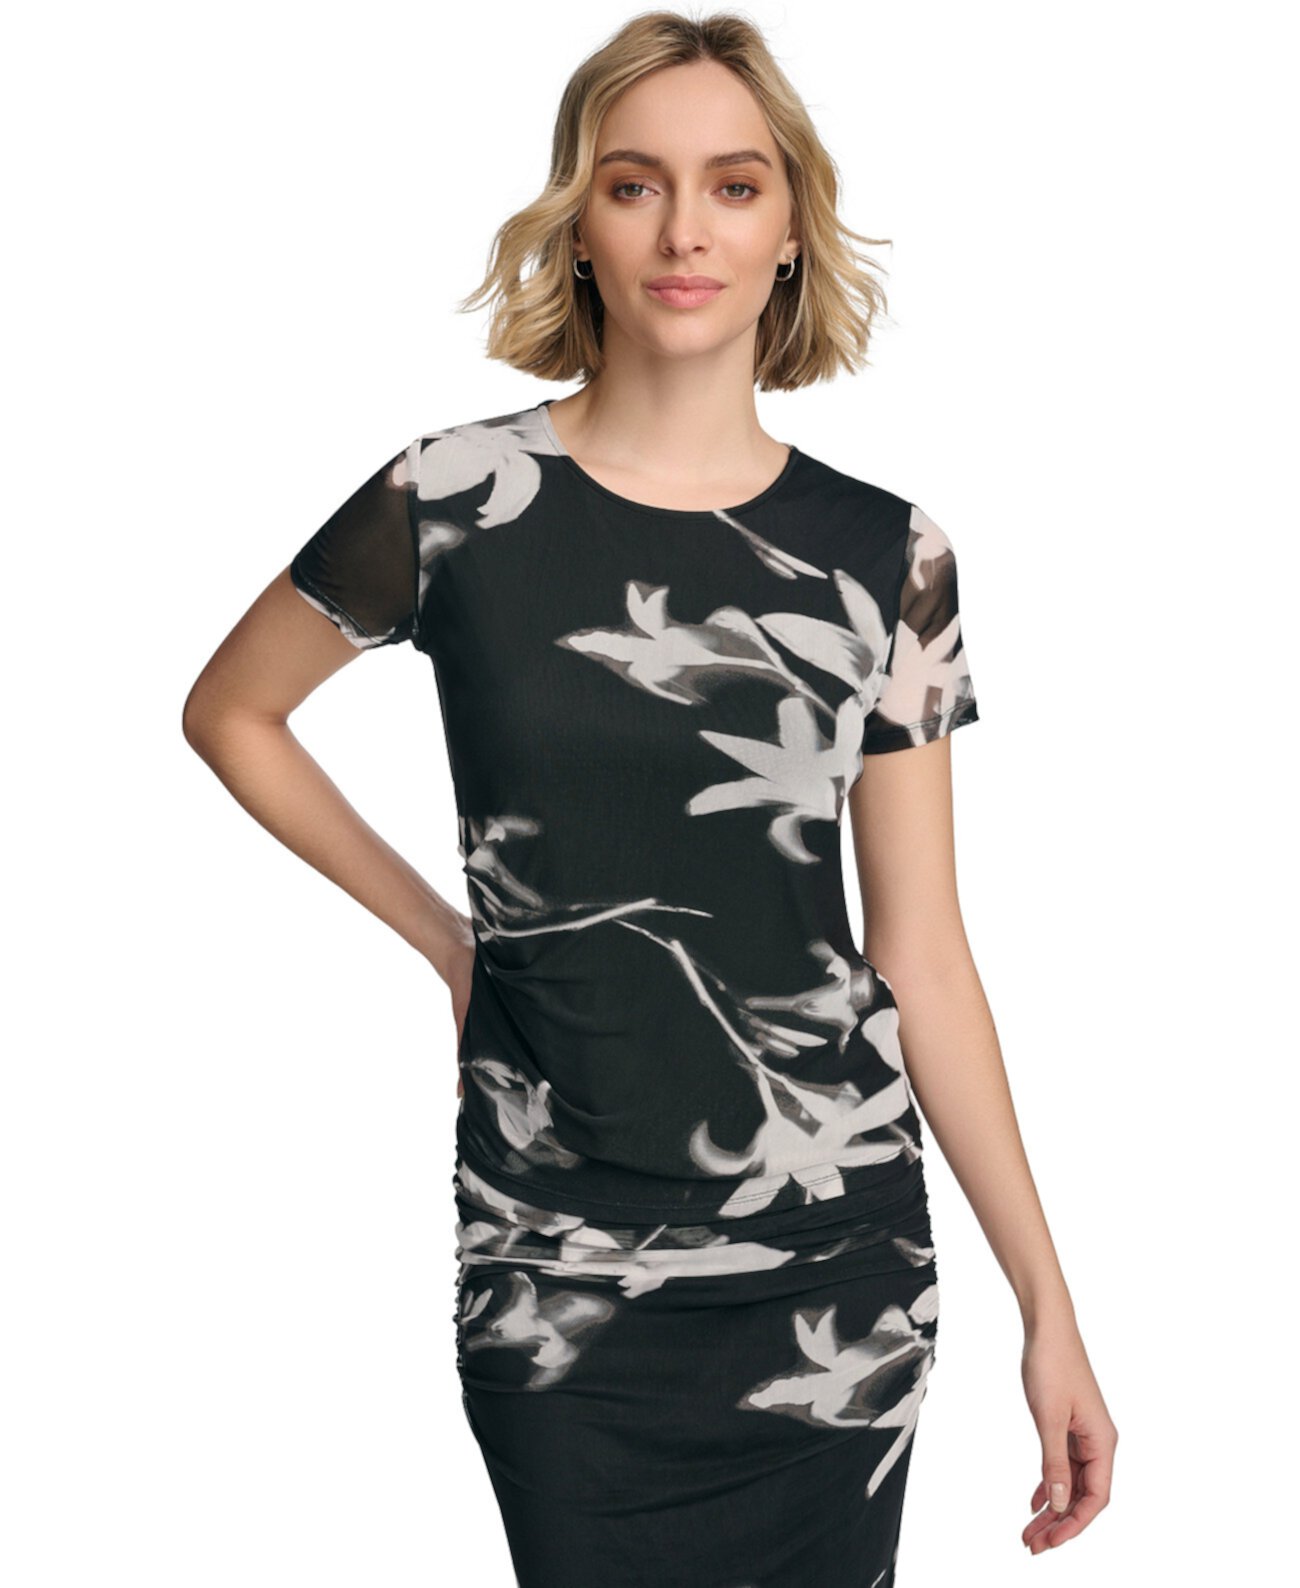 Women's Short Sleeve Floral-Print Top Calvin Klein